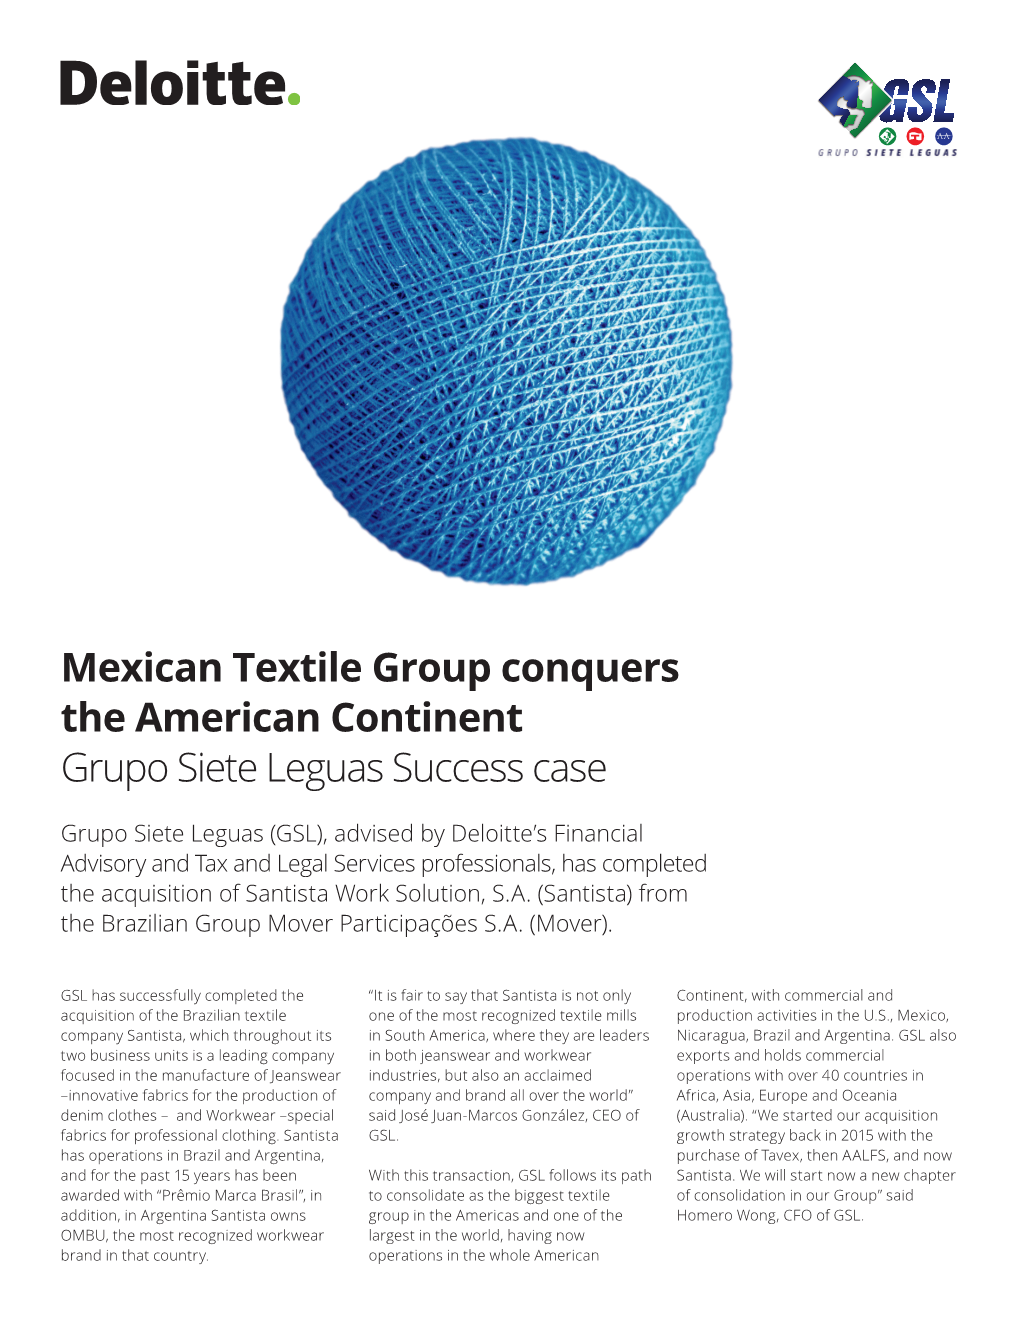 Mexican Textile Group Conquers the American Continent Grupo Siete Leguas Success Case